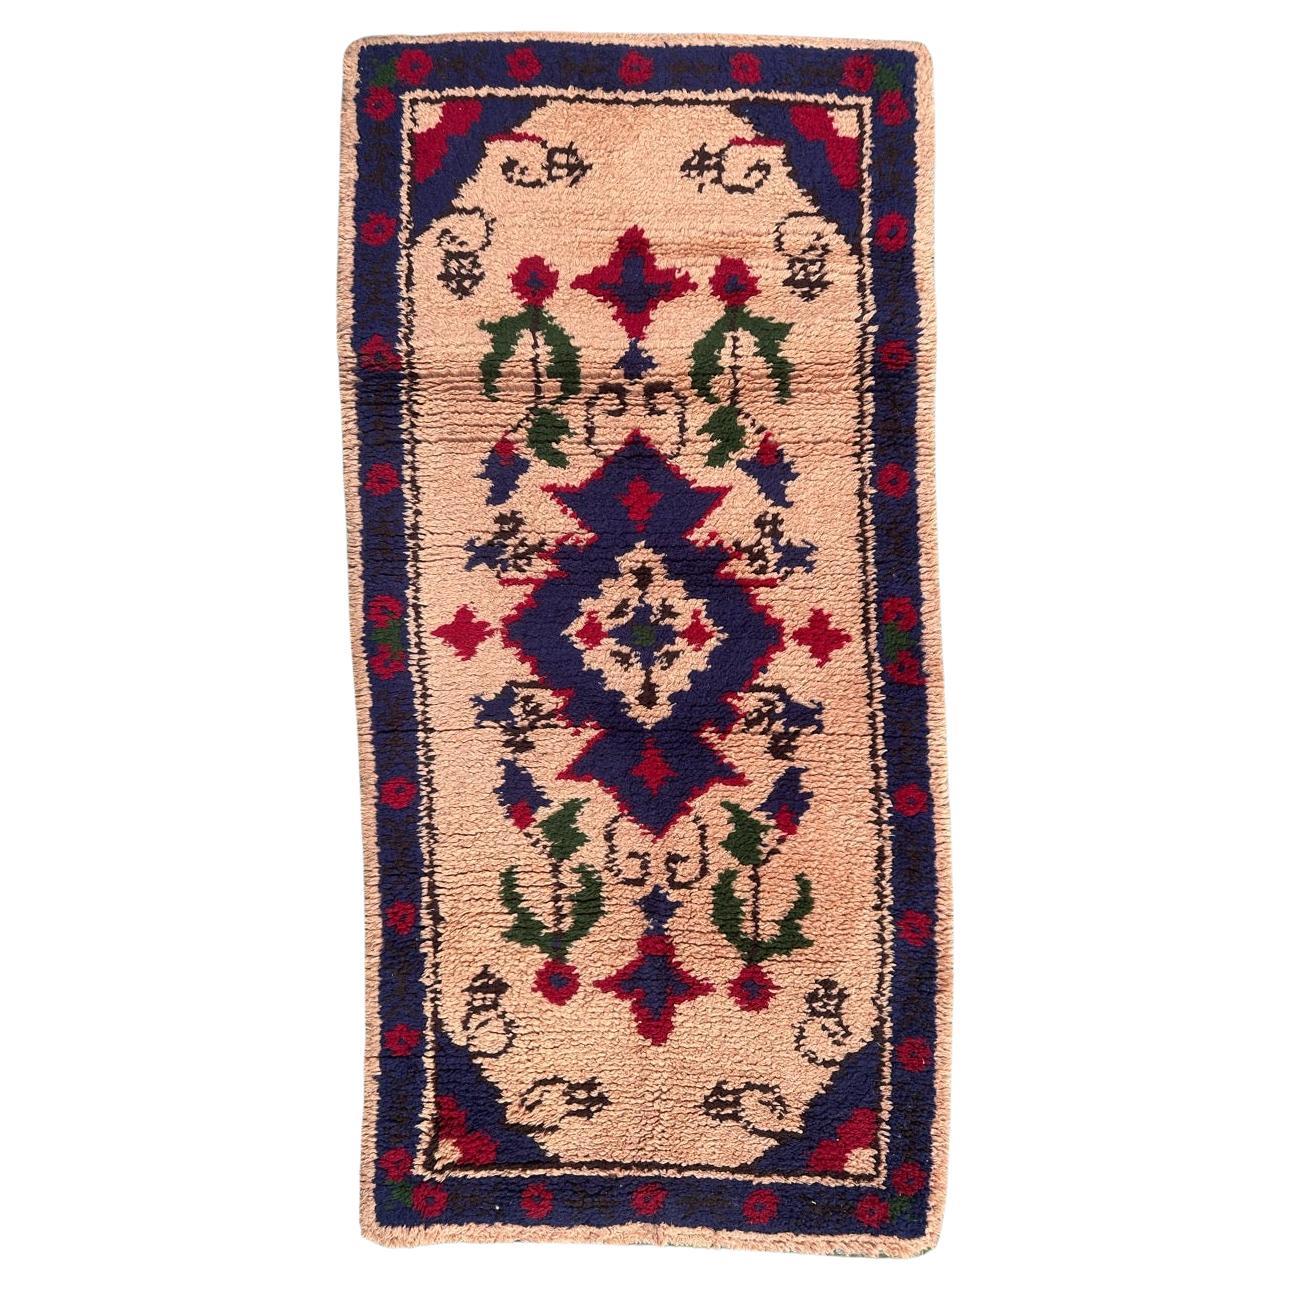 Bobyrug’s pretty vintage French Cogolin rug oushak design 